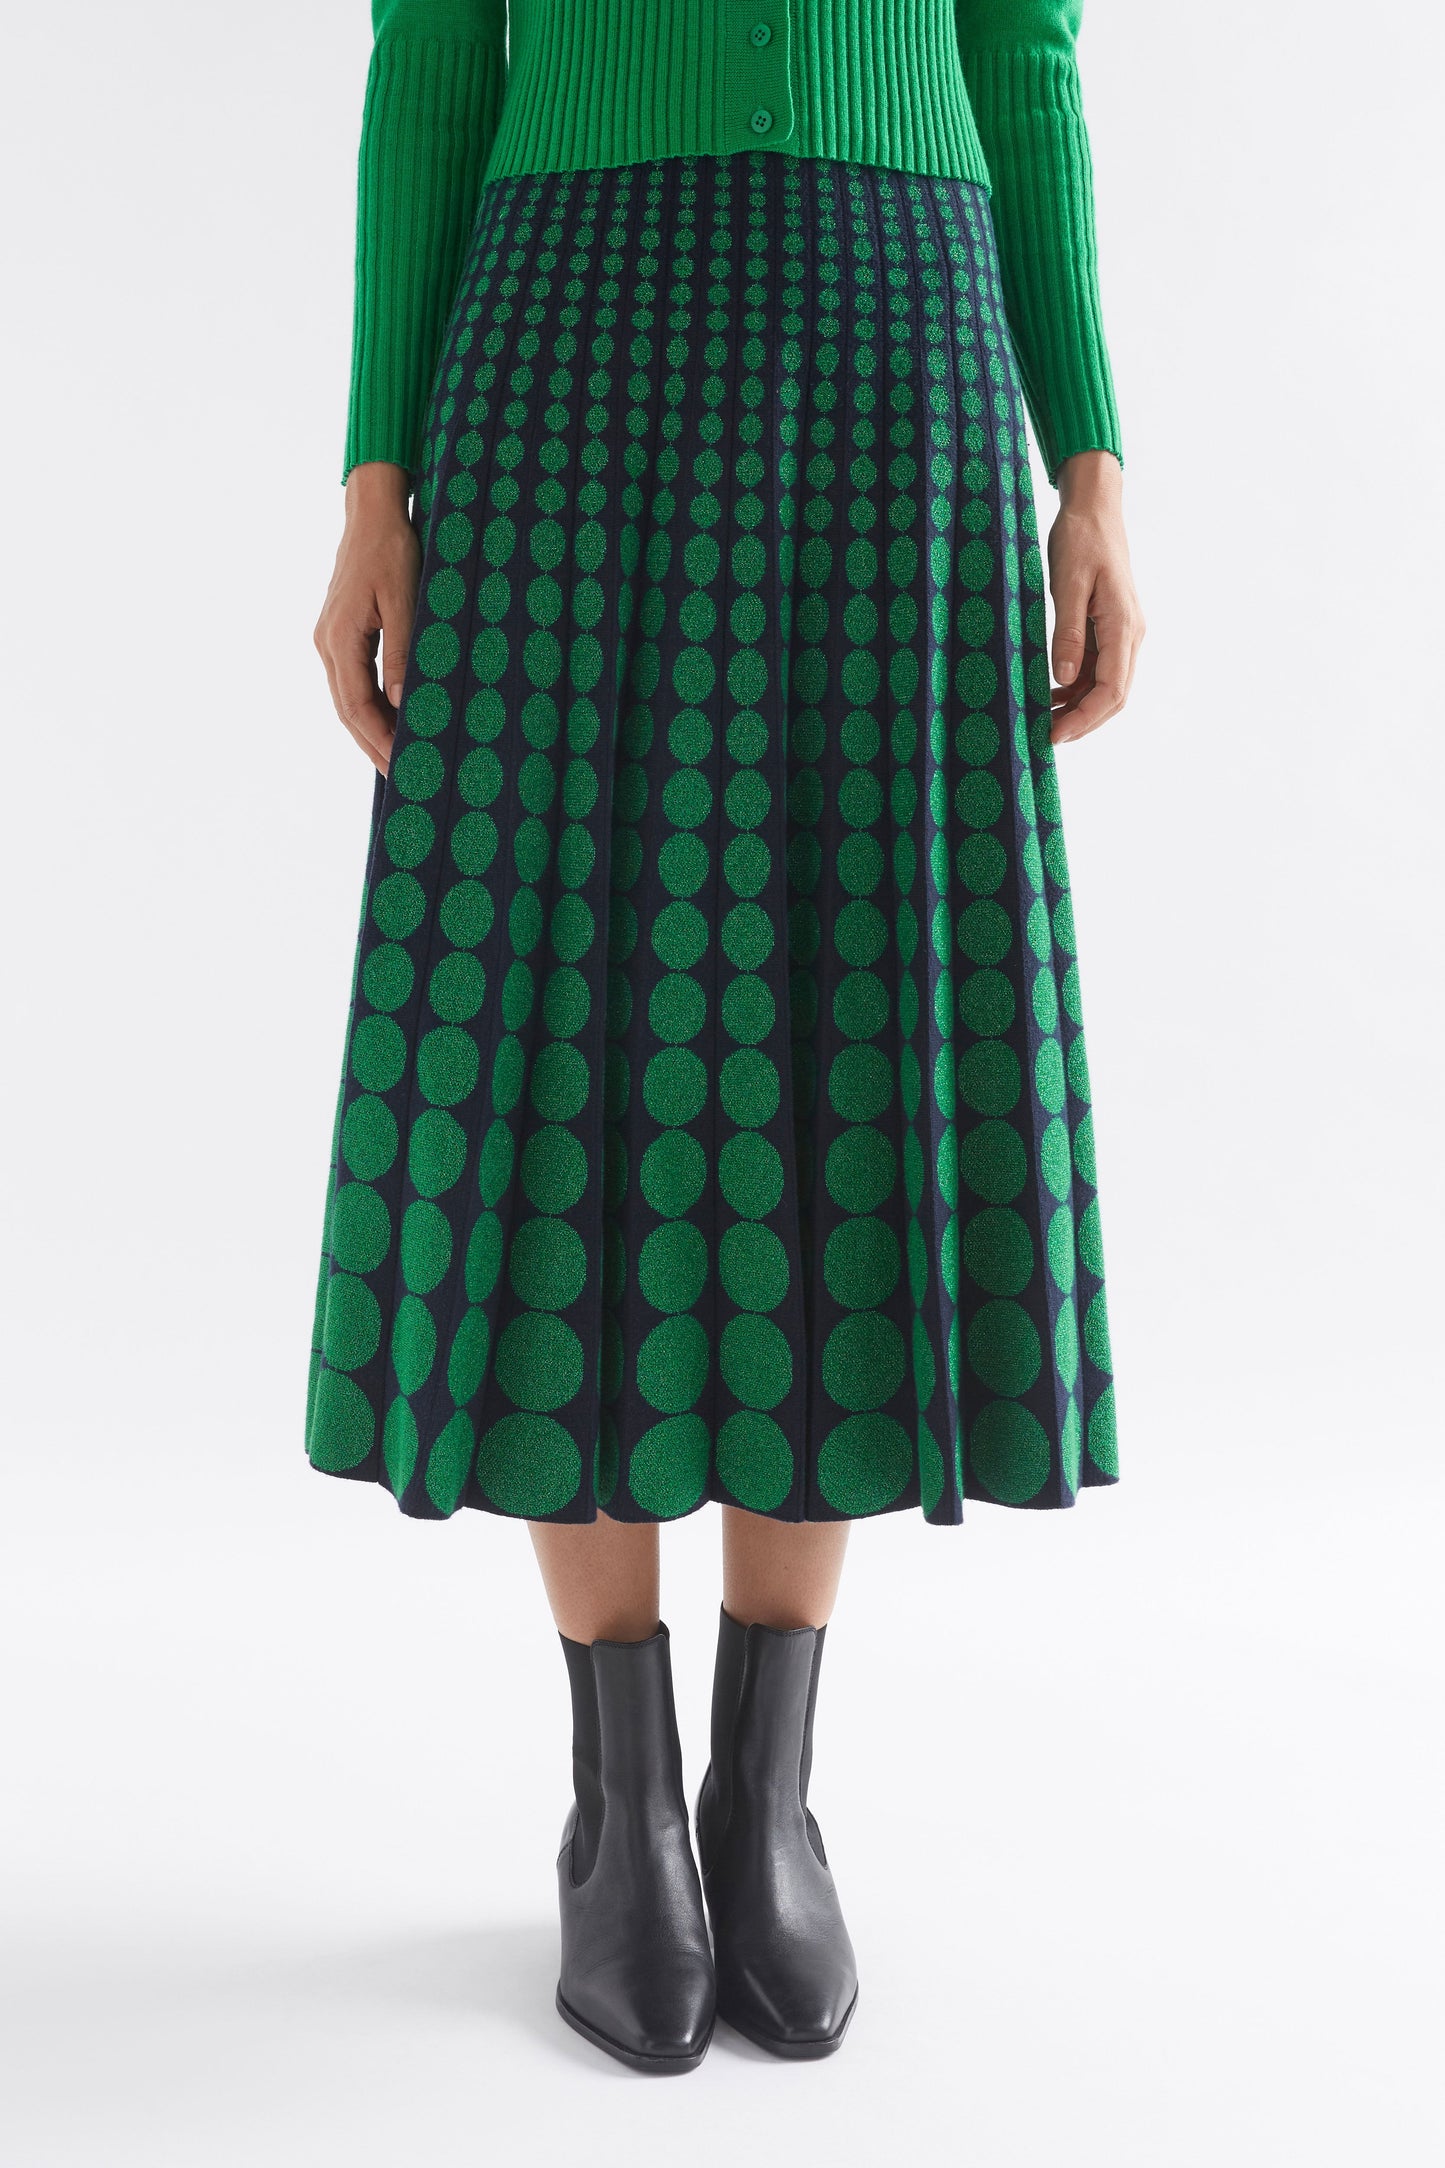 Leira A-Line Midi Metallic Knit Skirt with Circle Design Model Front | NAVY GREEN METALLIC